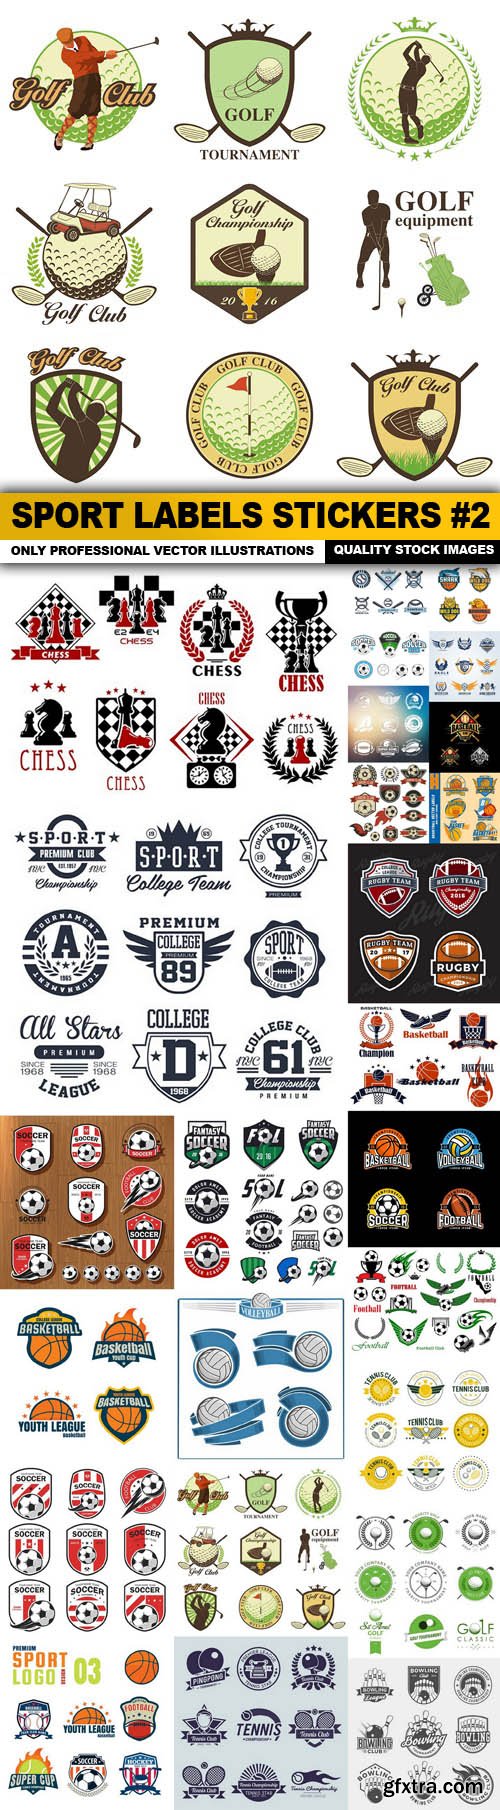 Sport Labels Stickers #2 - 25 Vector